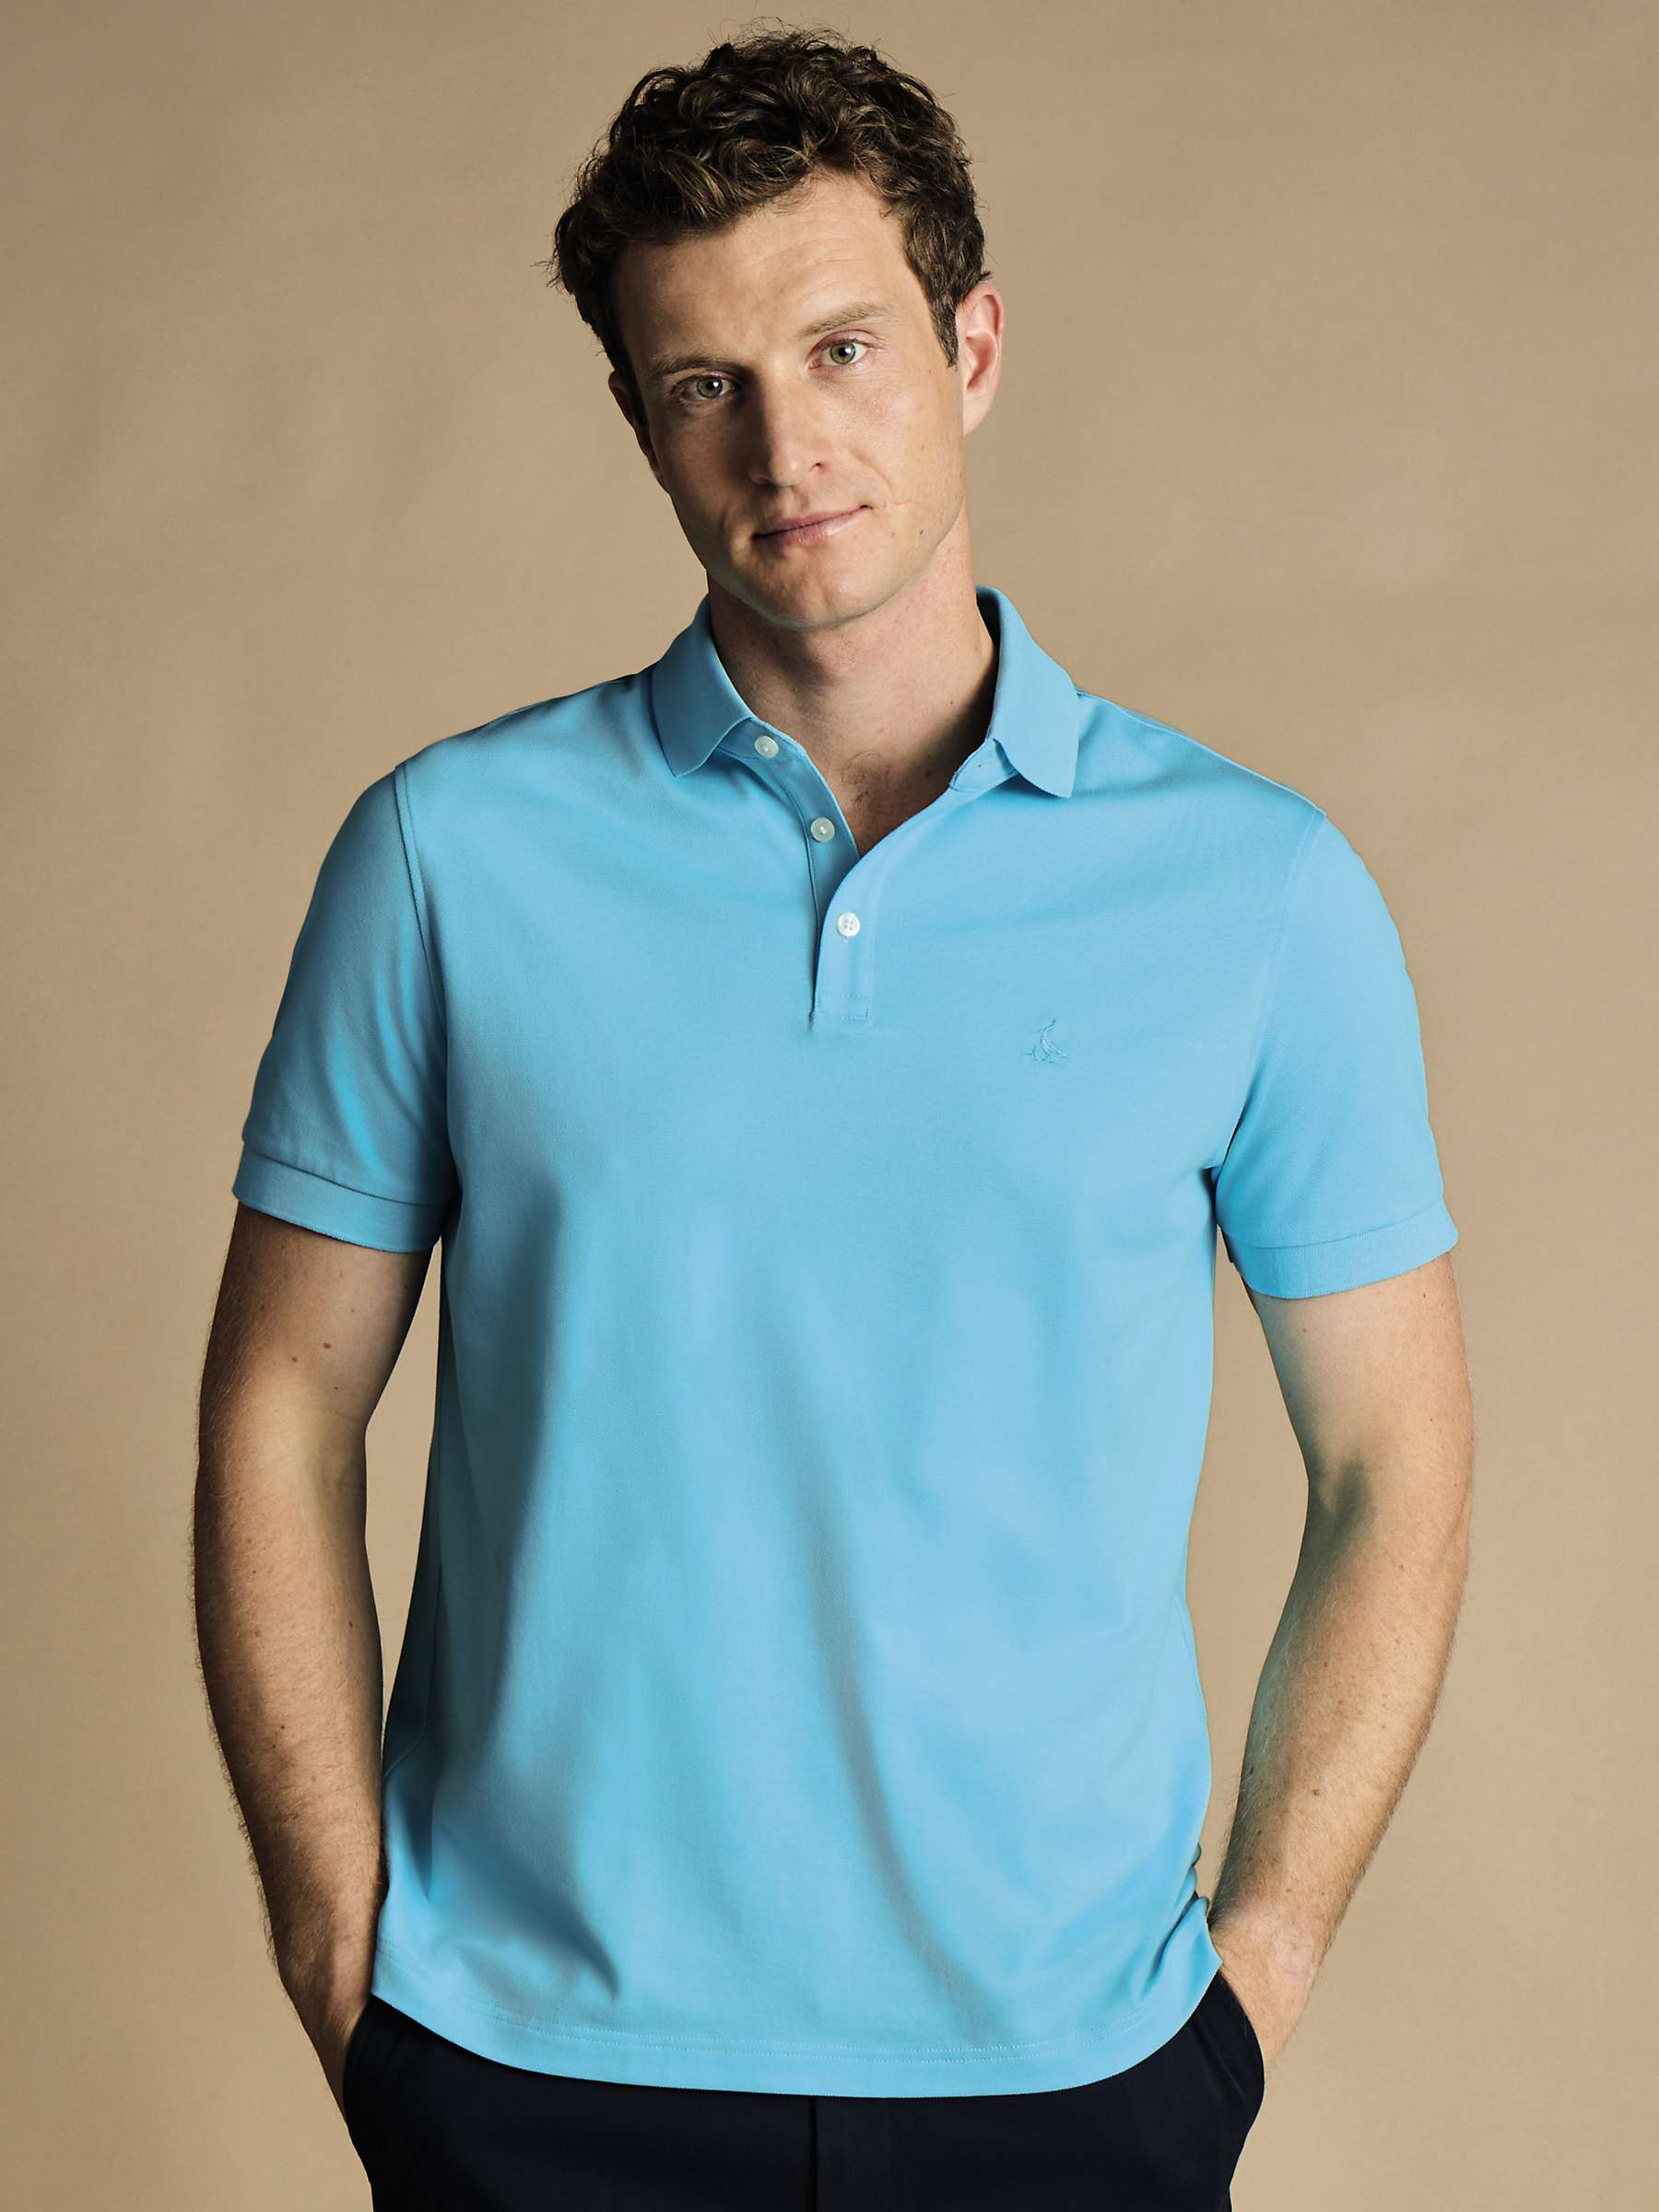 Buy Charles Tyrwhitt Pique Cotton Polo Shirt Online at johnlewis.com